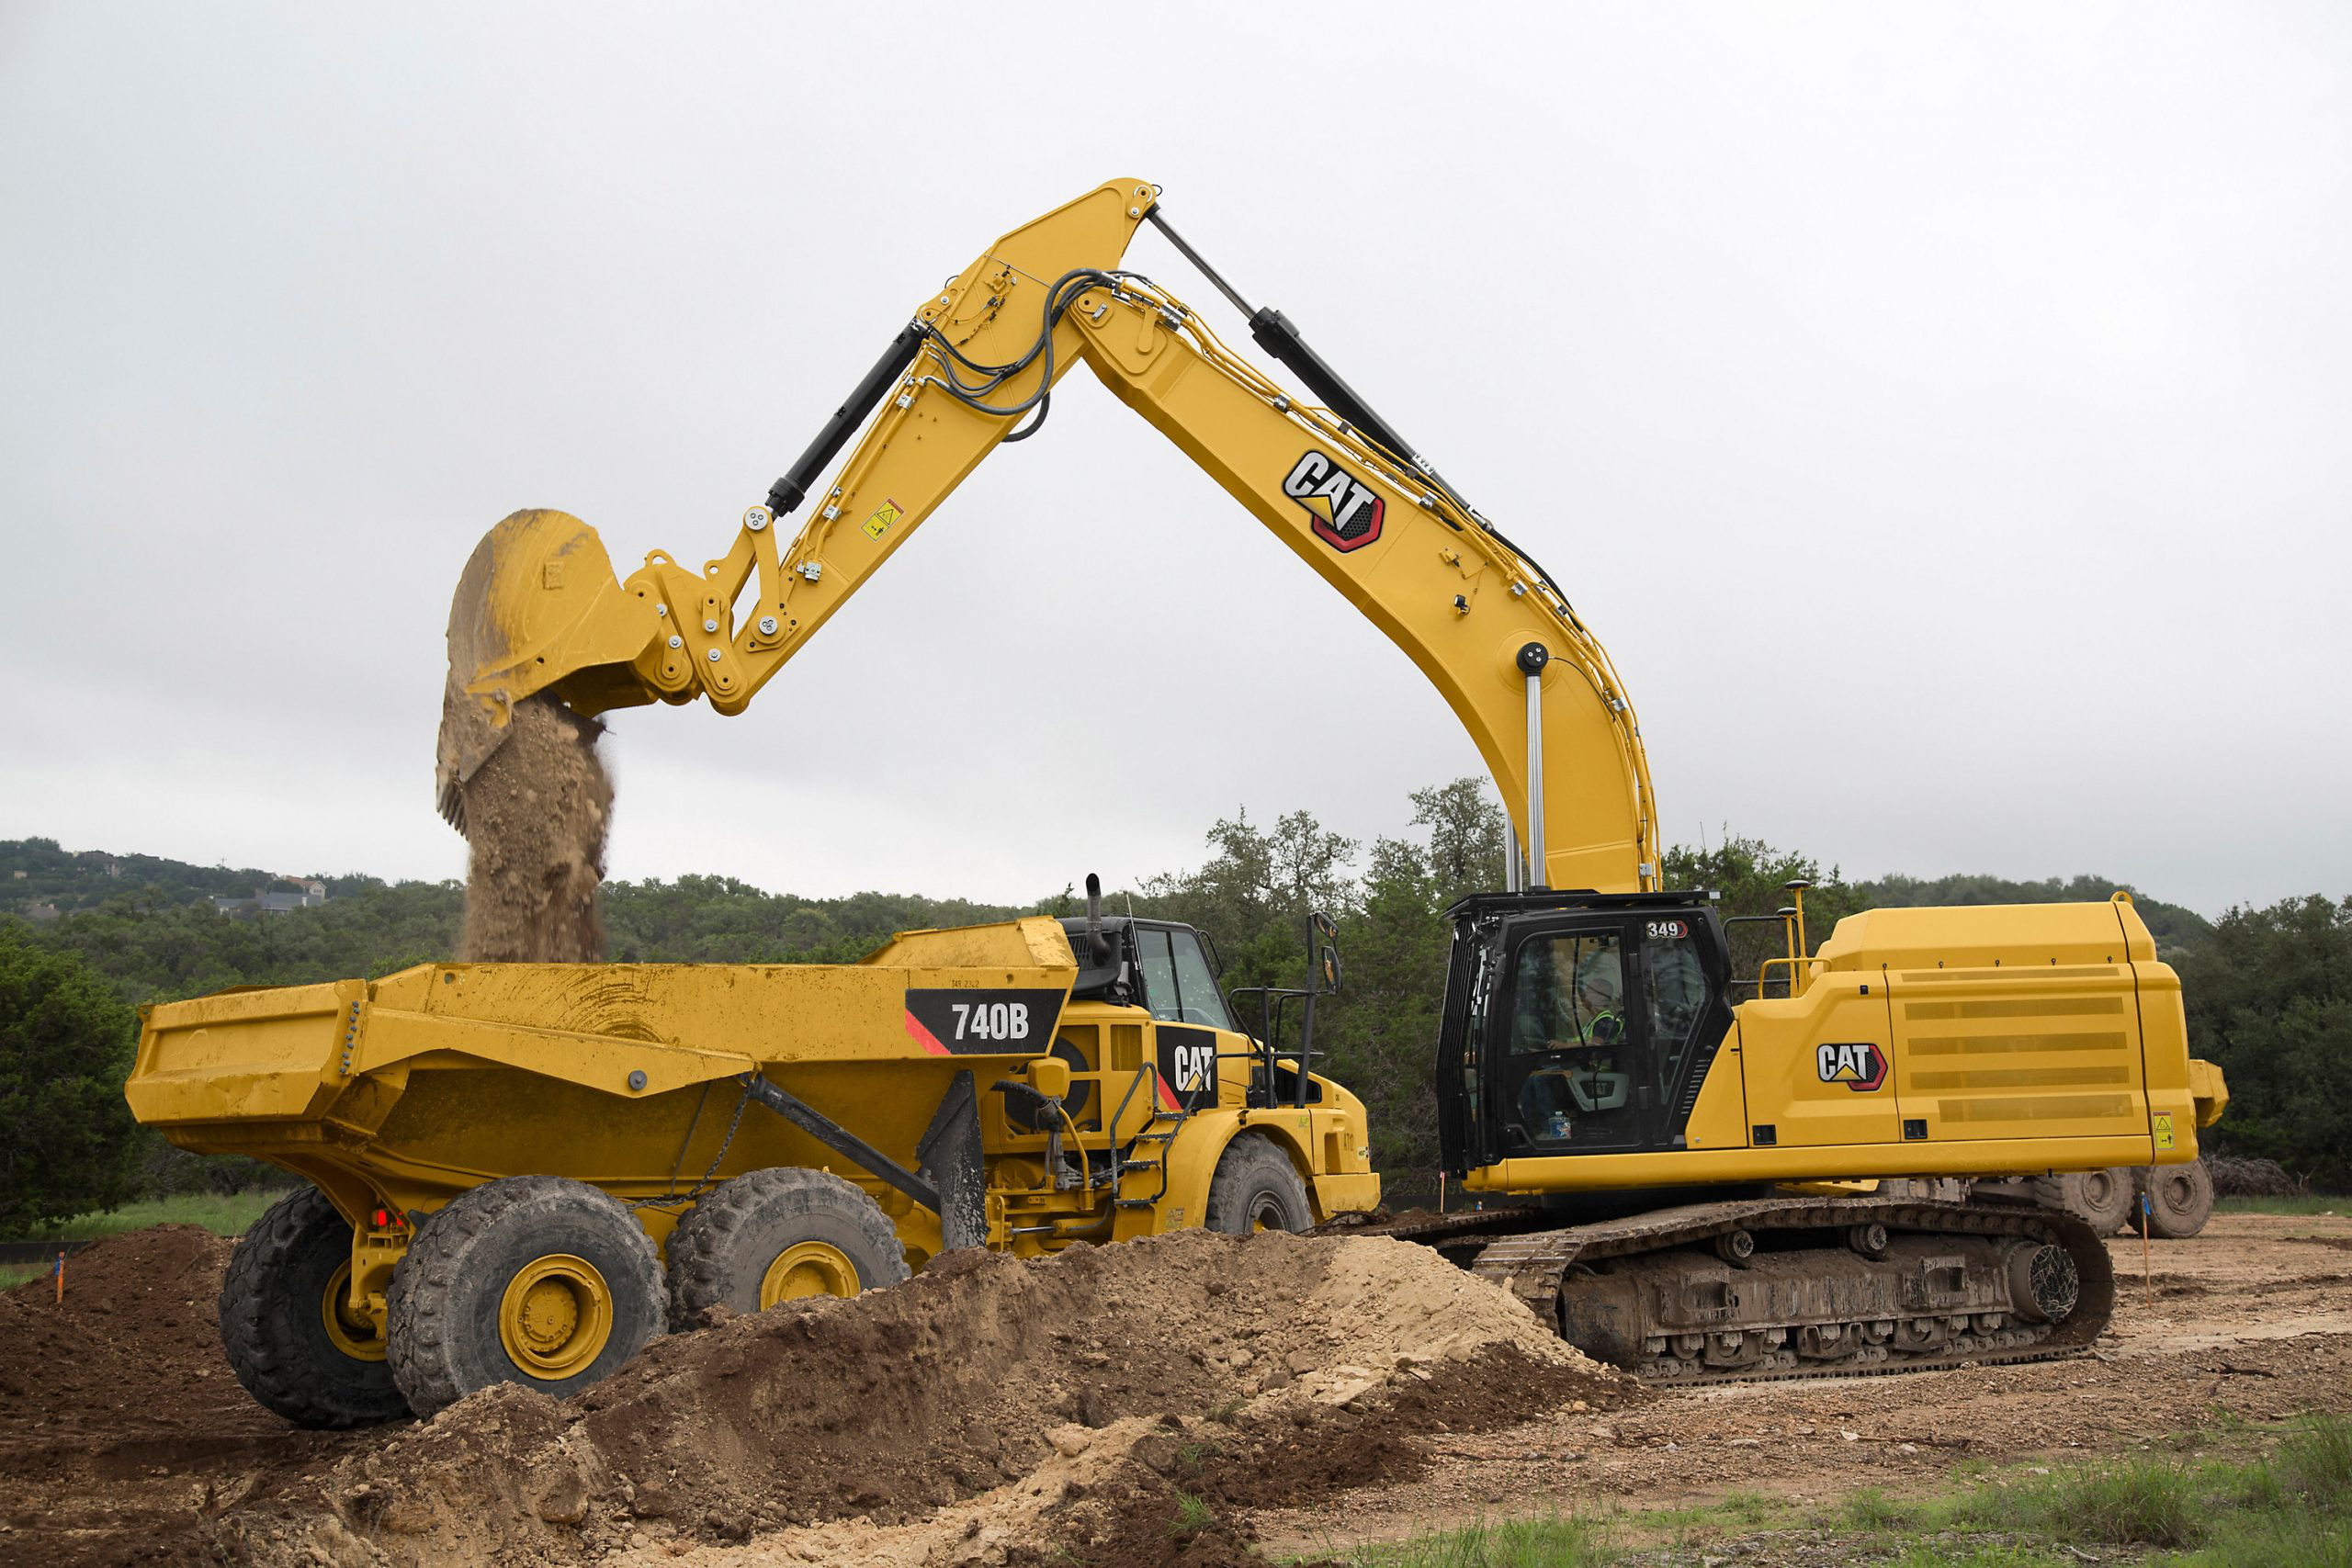 Cat excavator loads a Cat 740B with dirt